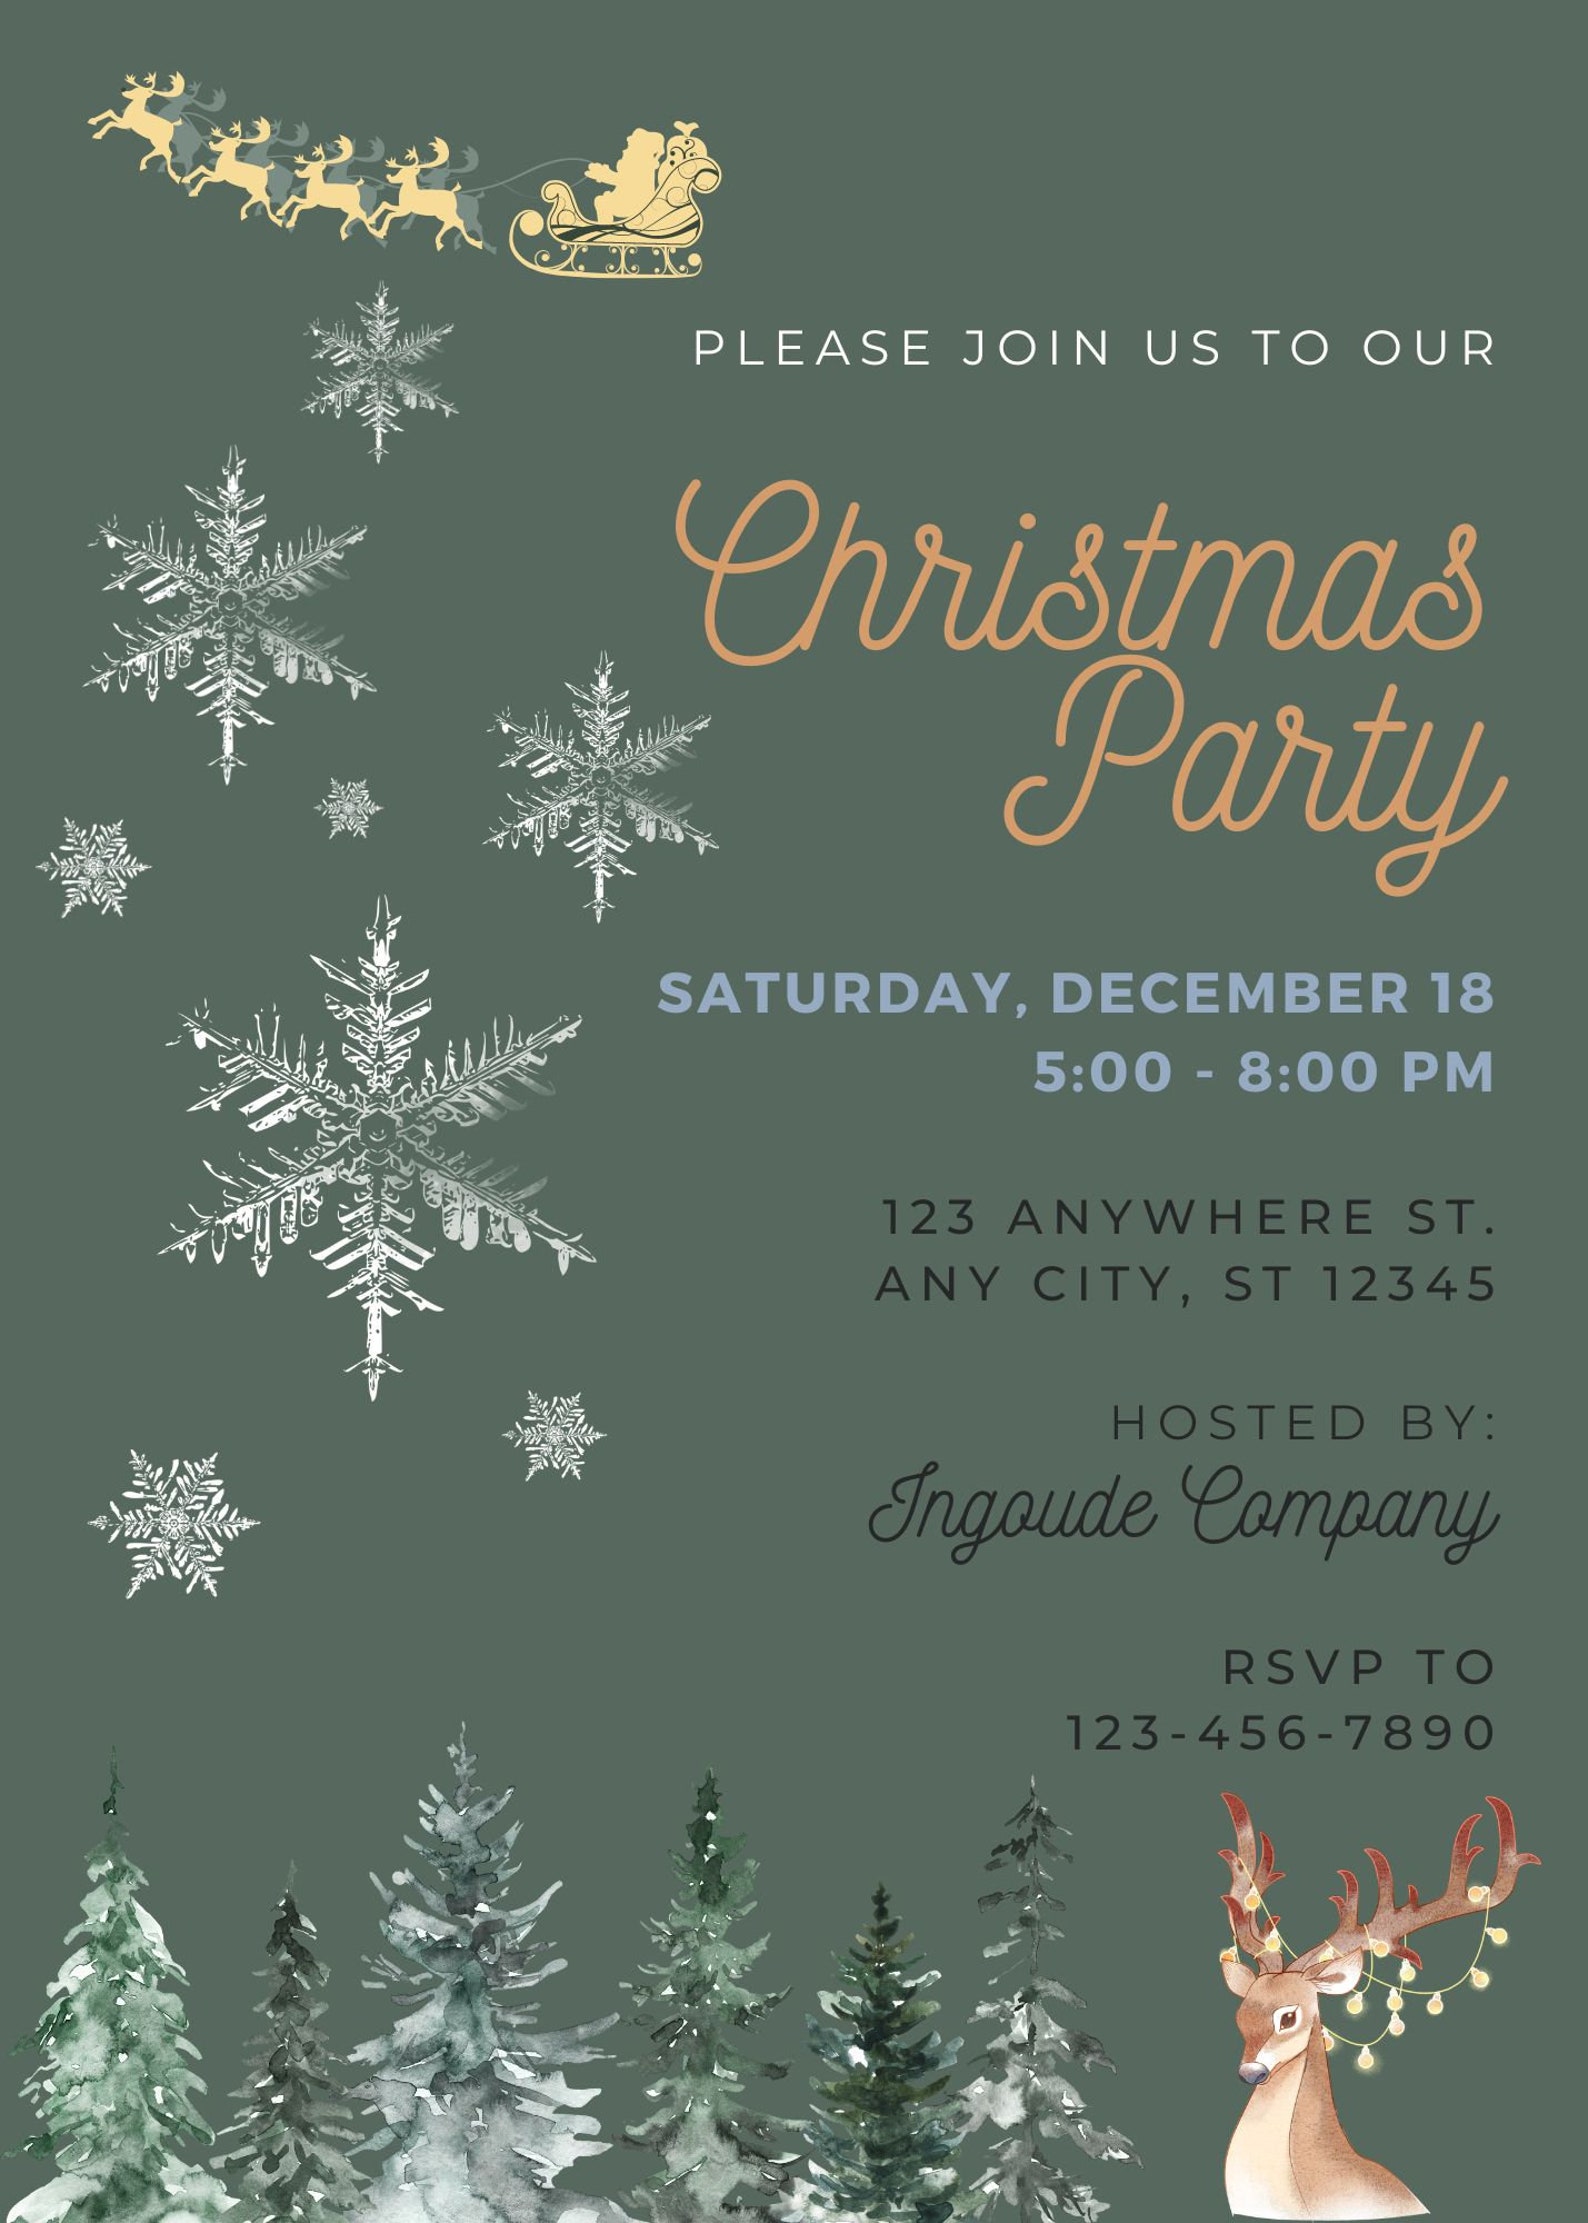 Christmas Party Invitation Editable in Canva Holiday - Etsy